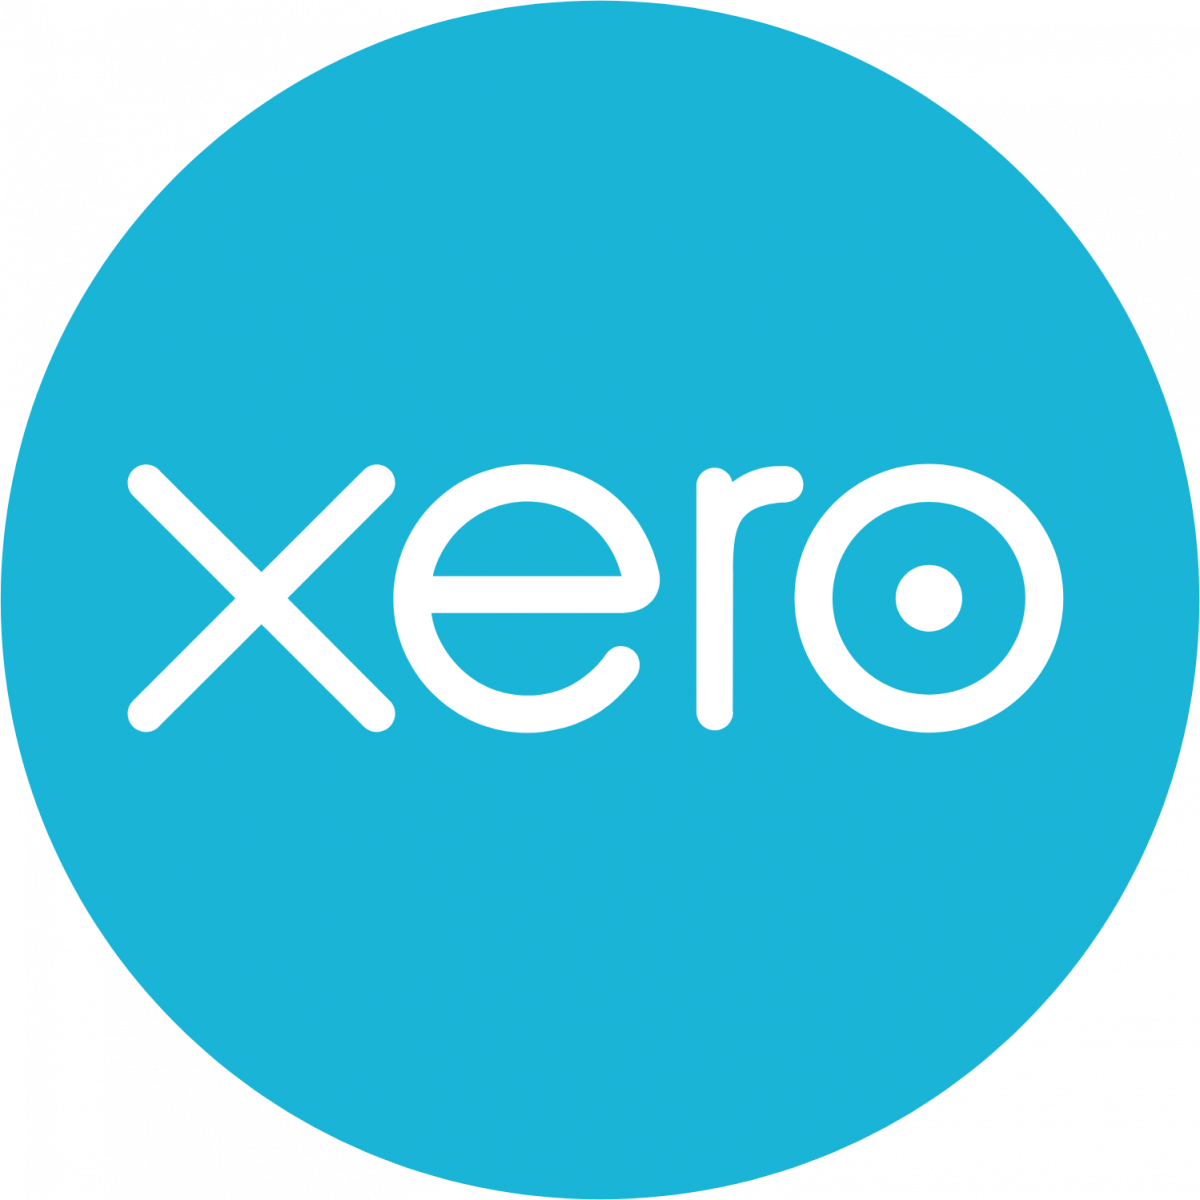 Xero It companies in Australia